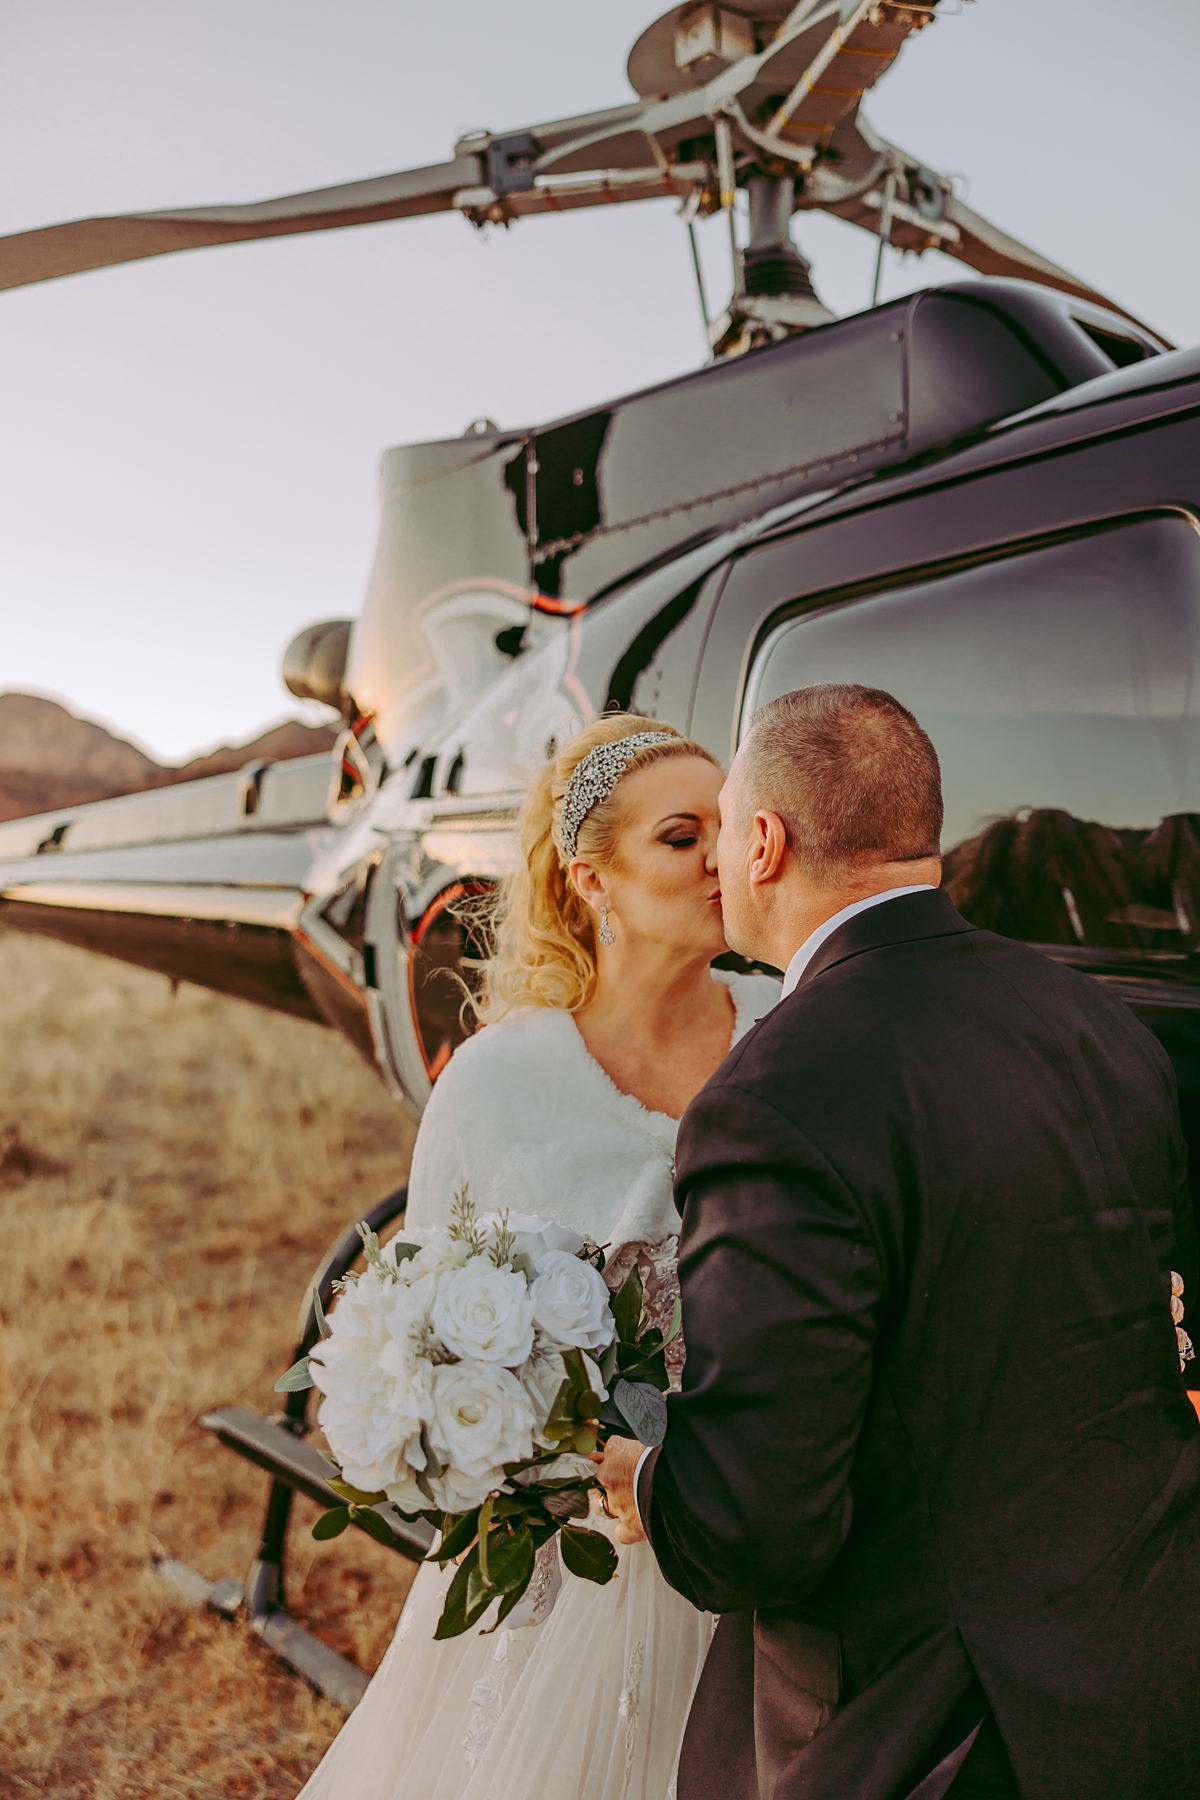 2-day-sedona-helicopter-elopement-adventure-104.jpg